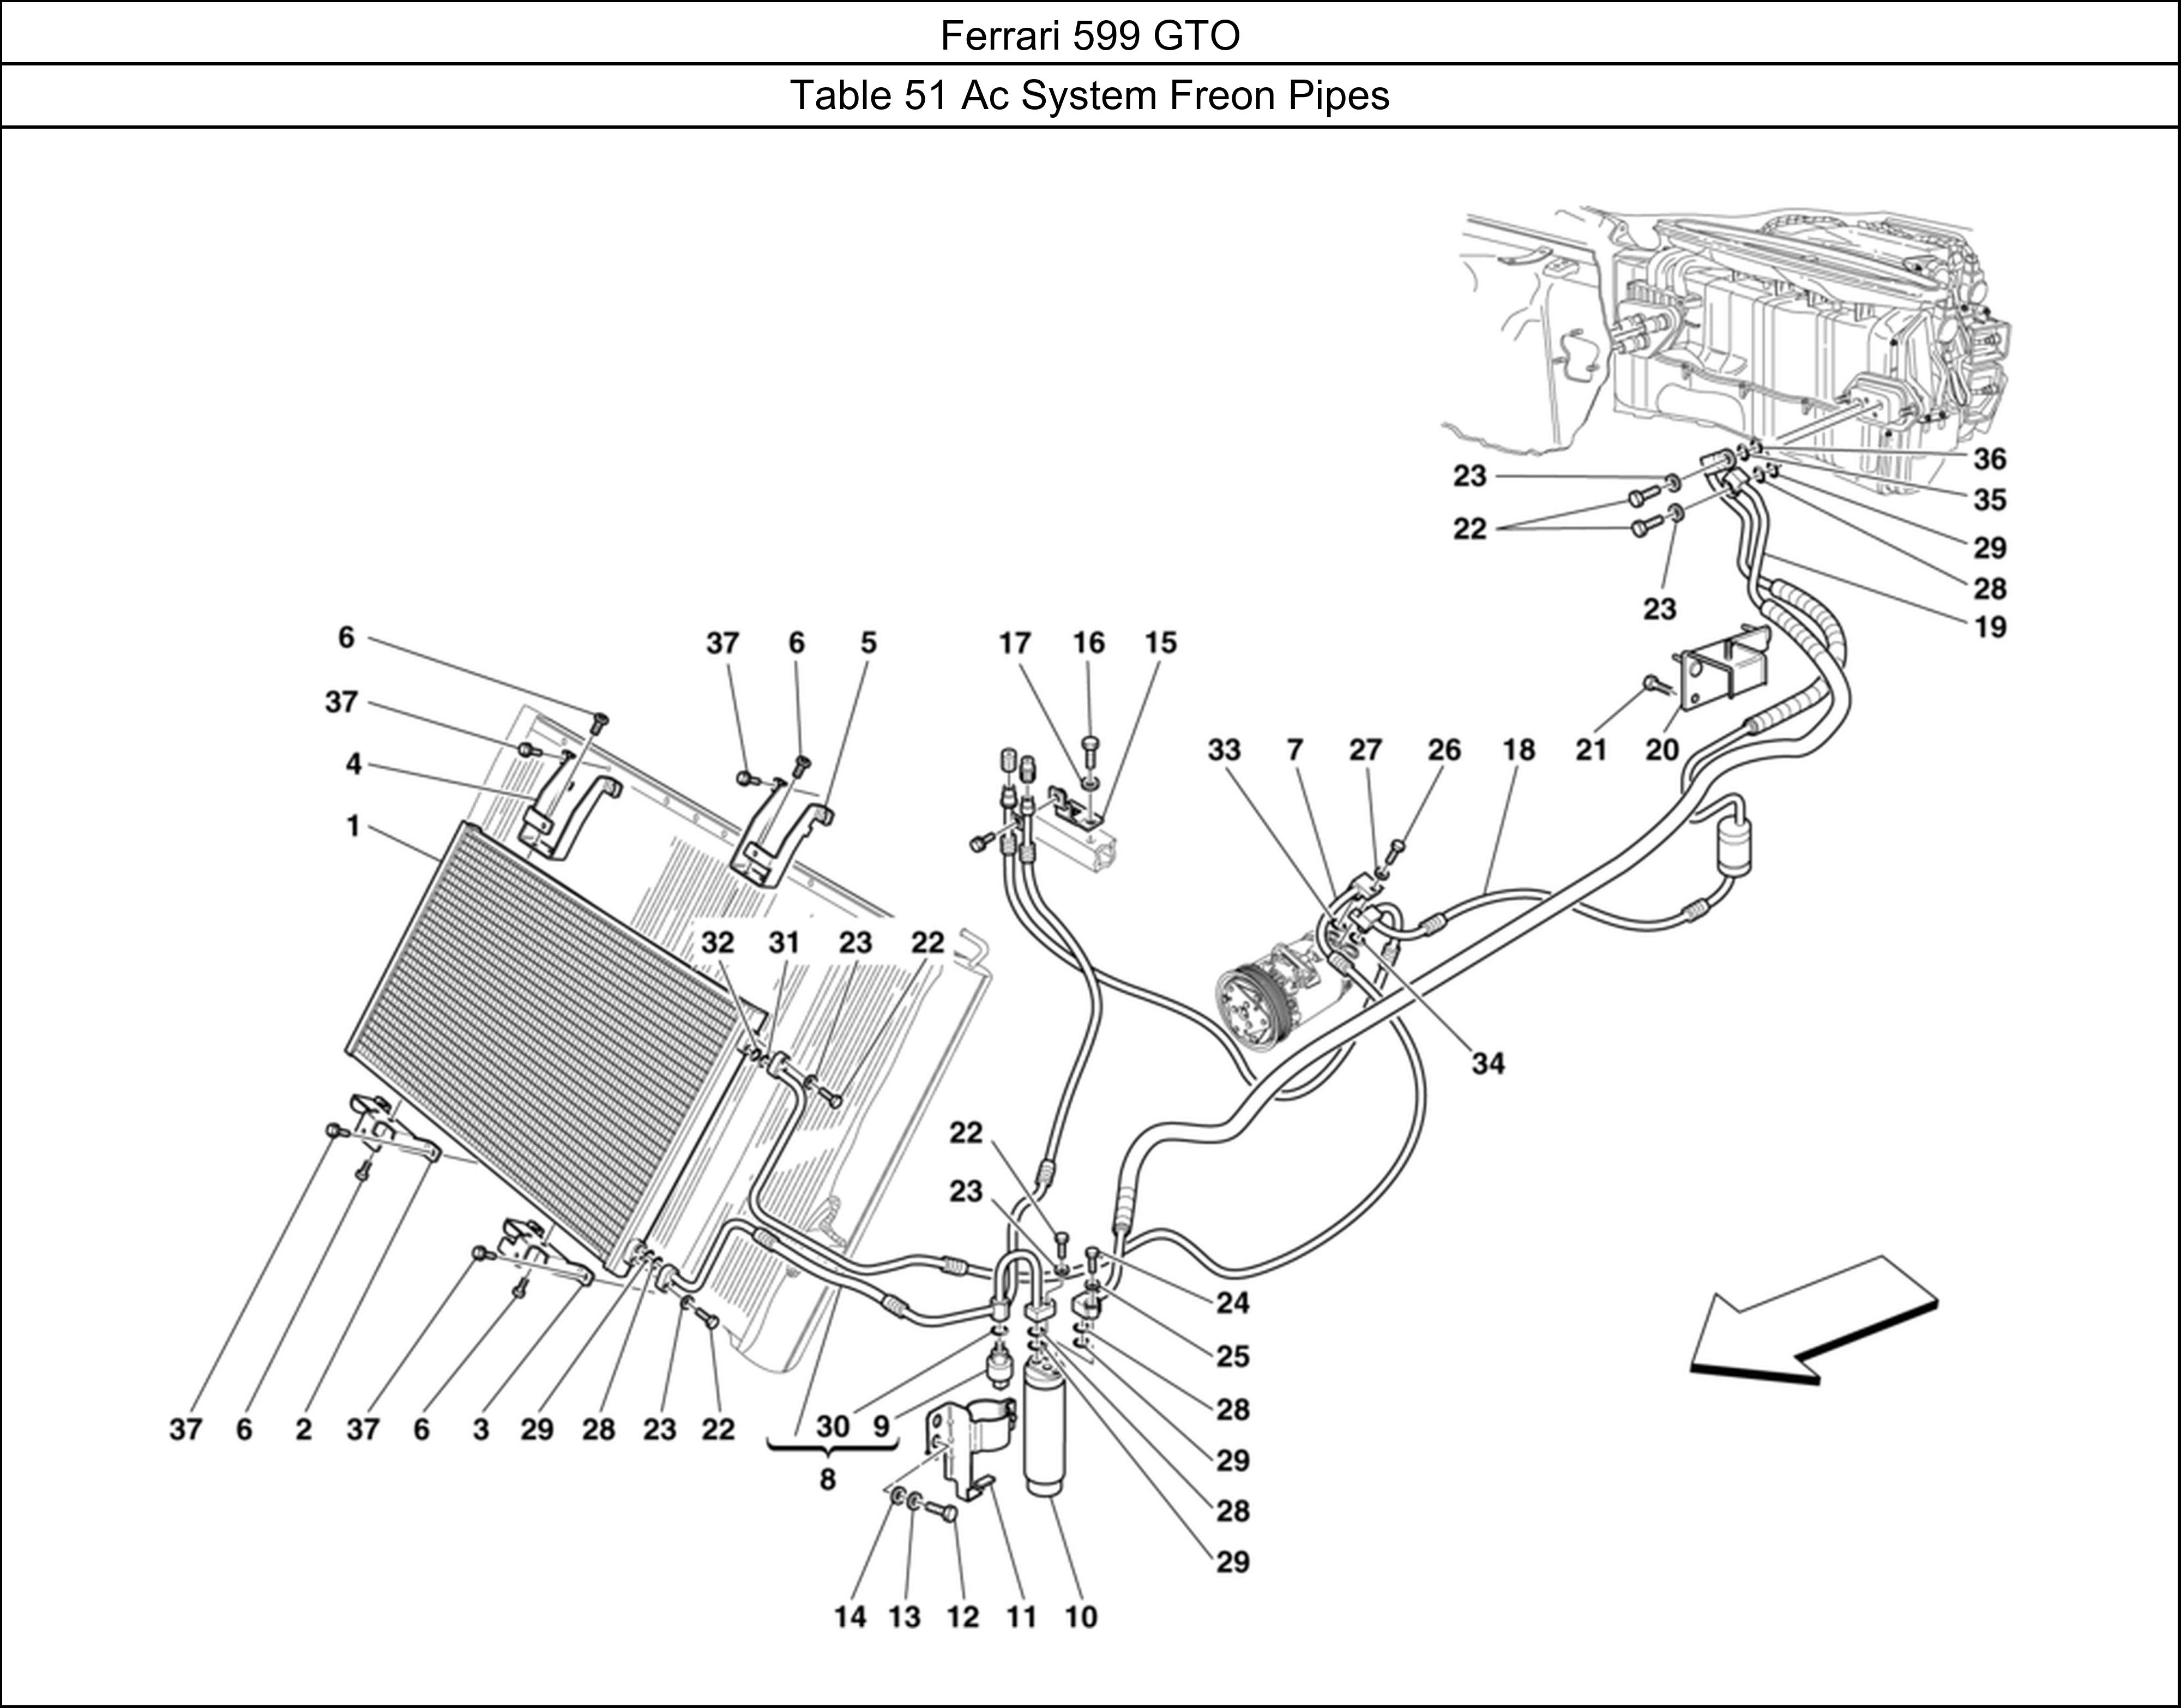 Ferrari Parts Ferrari 599 GTO Table 51 Ac System Freon Pipes